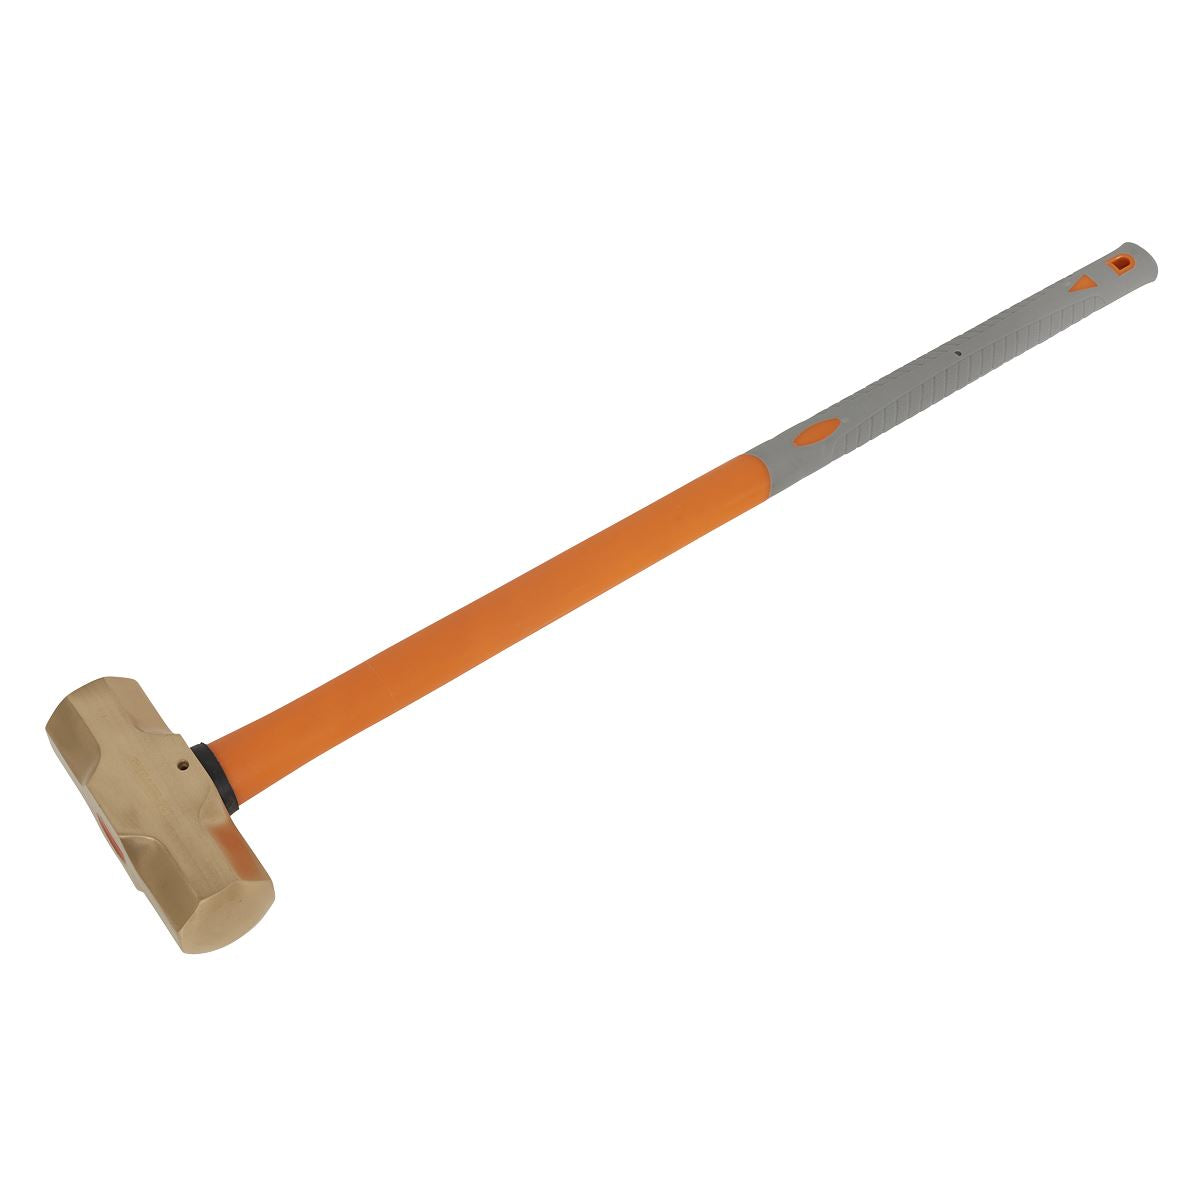 Sealey Premier Sledge Hammer 11lb - Non-Sparking